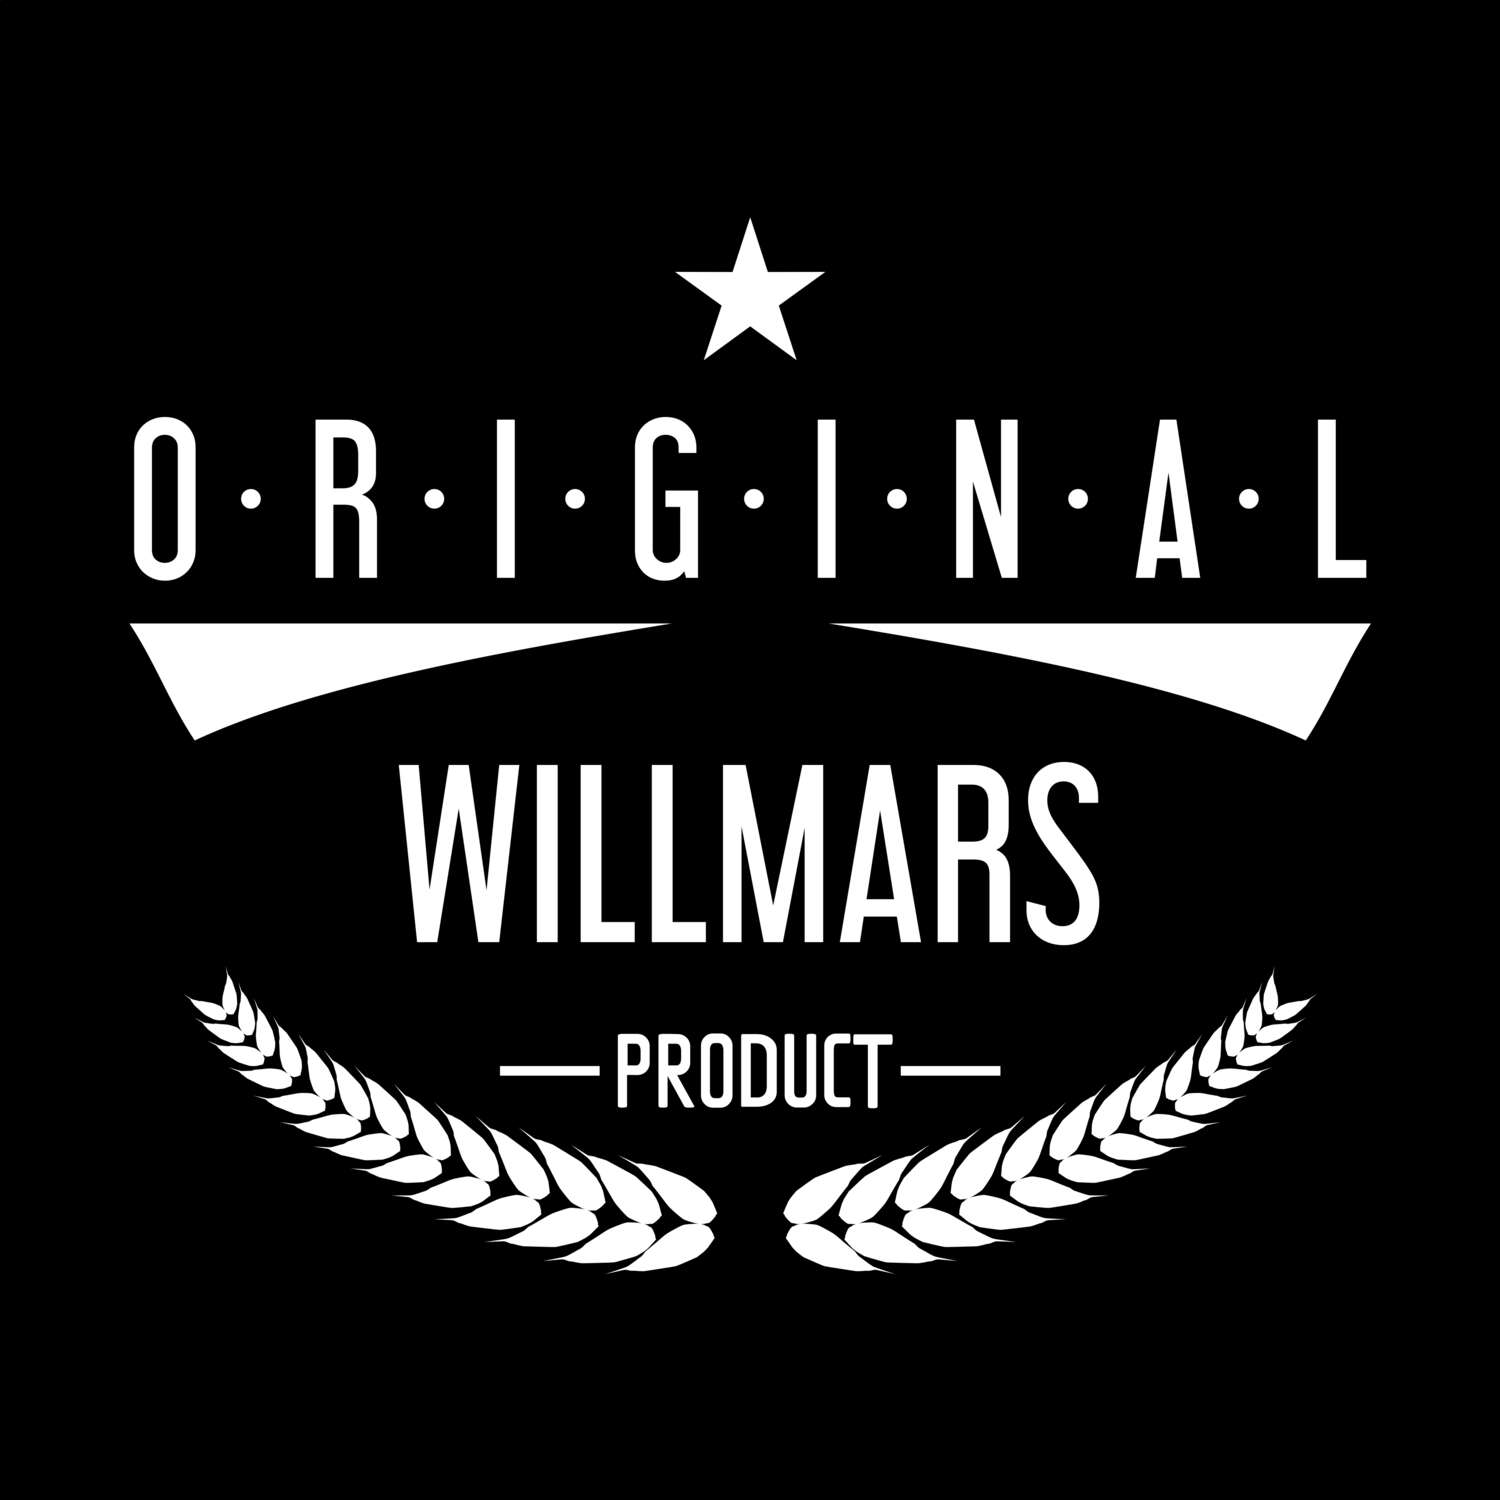 Willmars T-Shirt »Original Product«